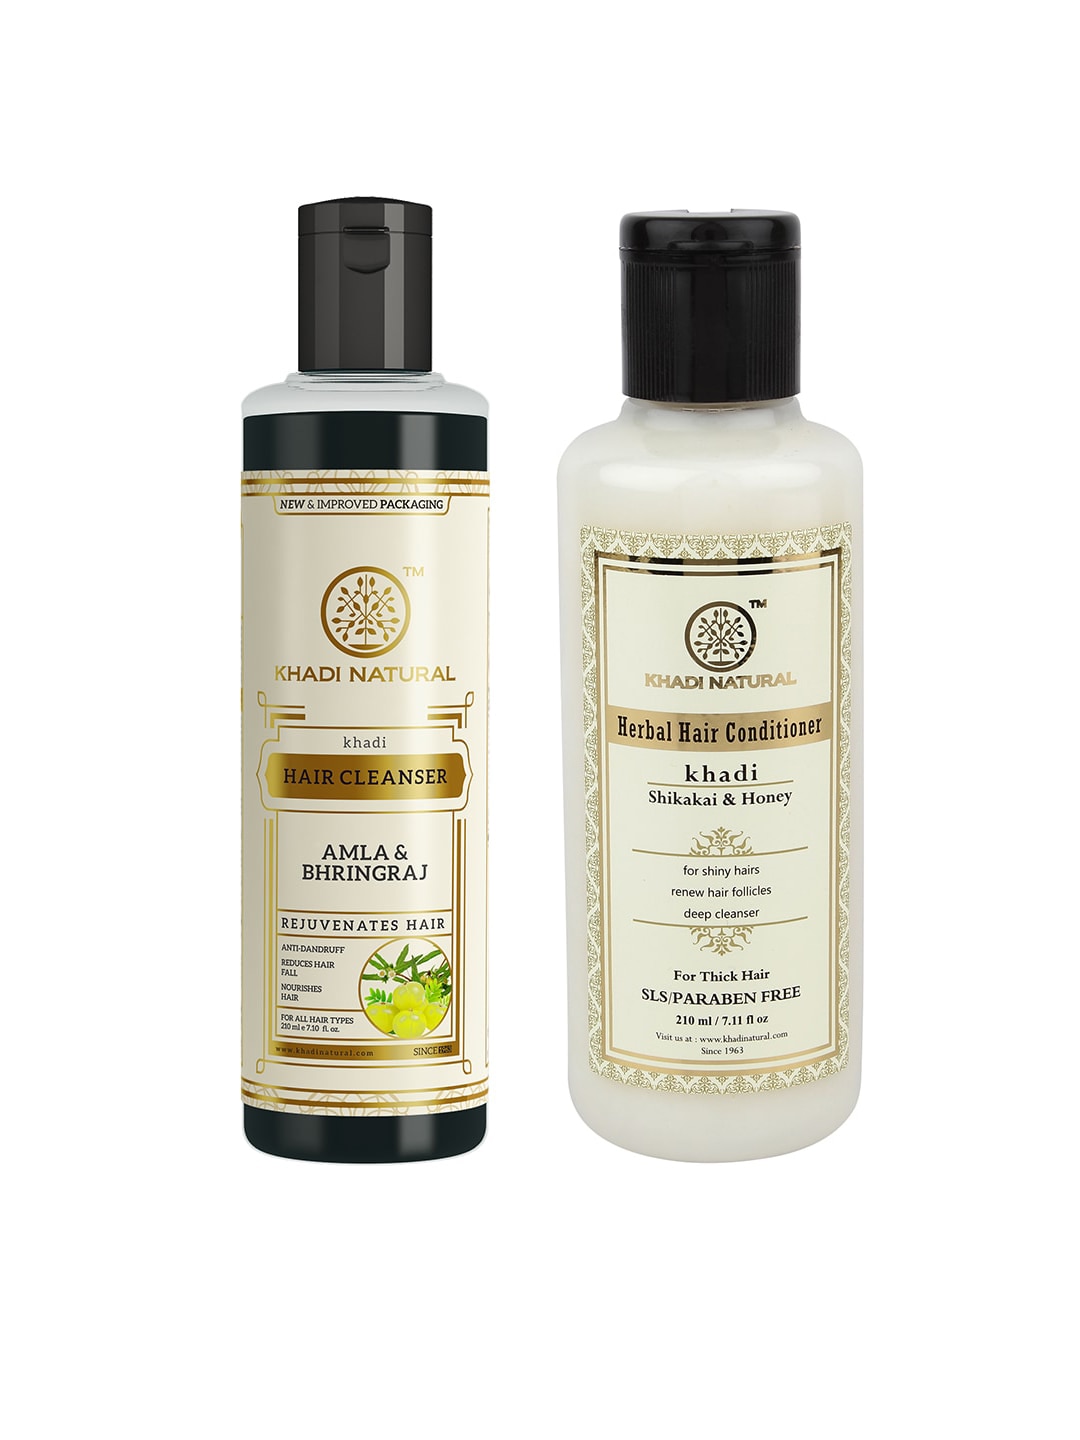 Khadi Natural Amla & Bhringraj Hair Cleanser & Shikakai & Honey Herbal Hair Conditioner Price in India